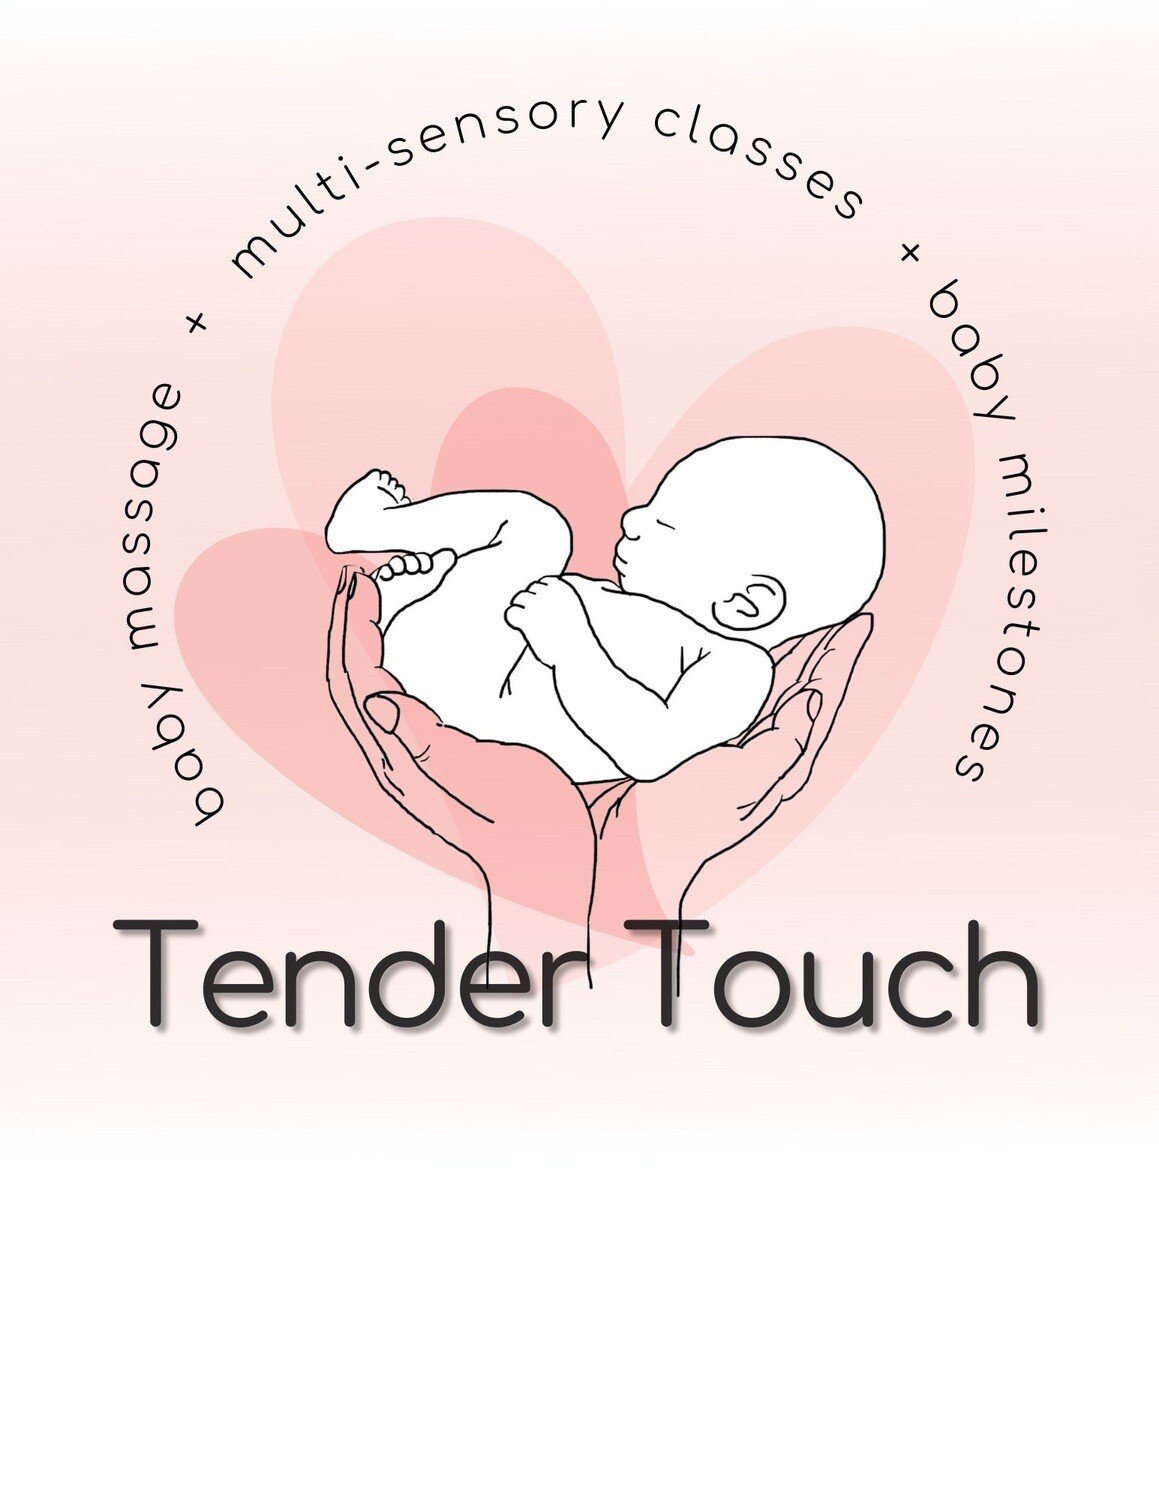 Tender Touch Baby Massage logo